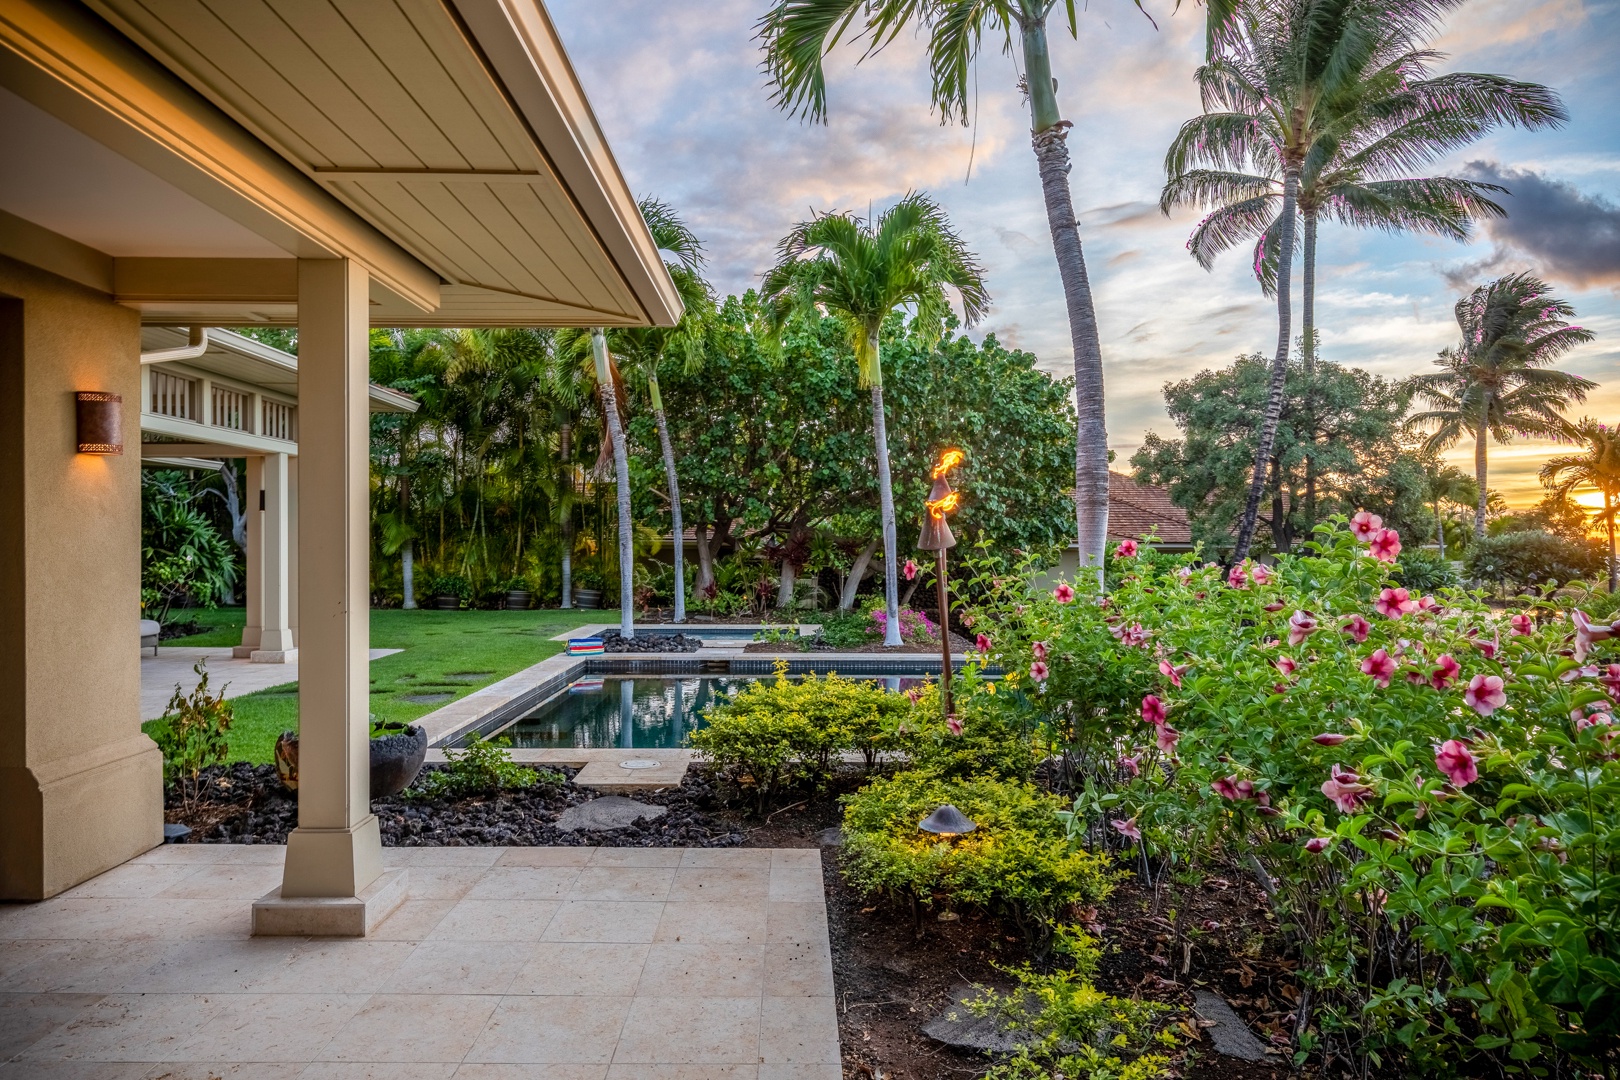 Kailua Kona Vacation Rentals, 4BD Hainoa Estate (122) at Four Seasons Resort at Hualalai - View from the primary lanai daybed.